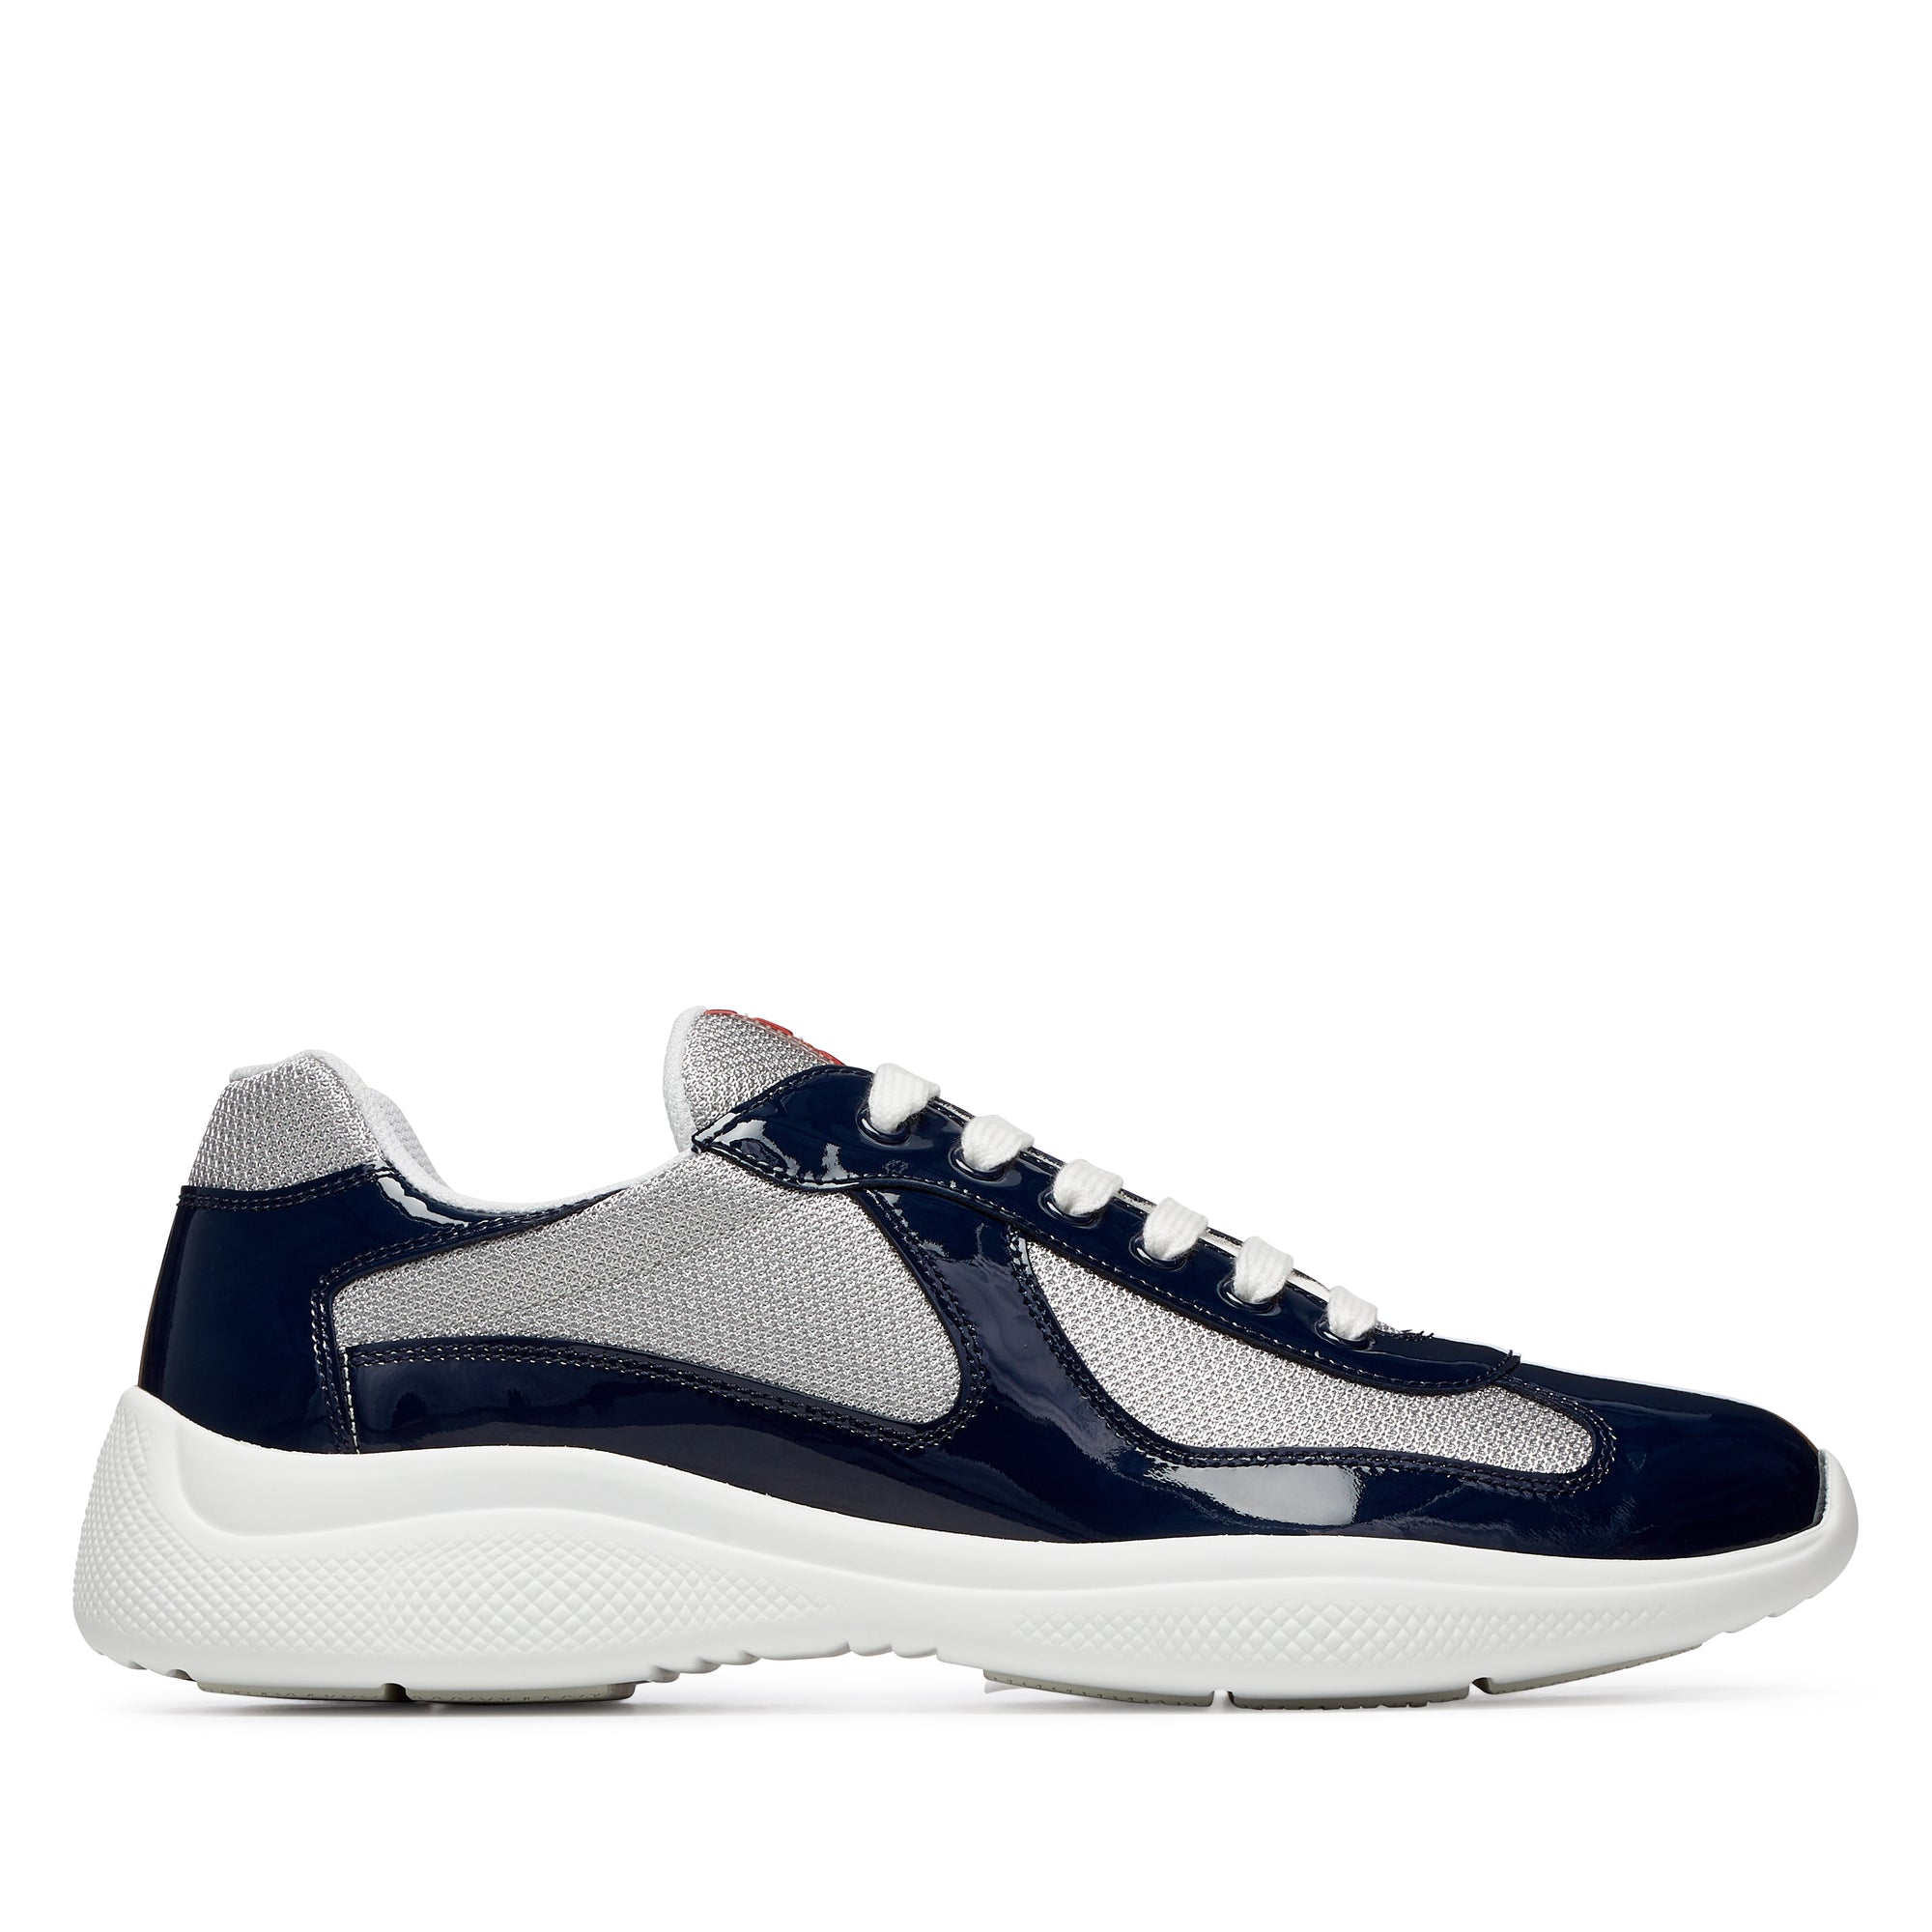 Prada - Men's America's Cup Sneakers - (Royal Blue/Silver) view 1